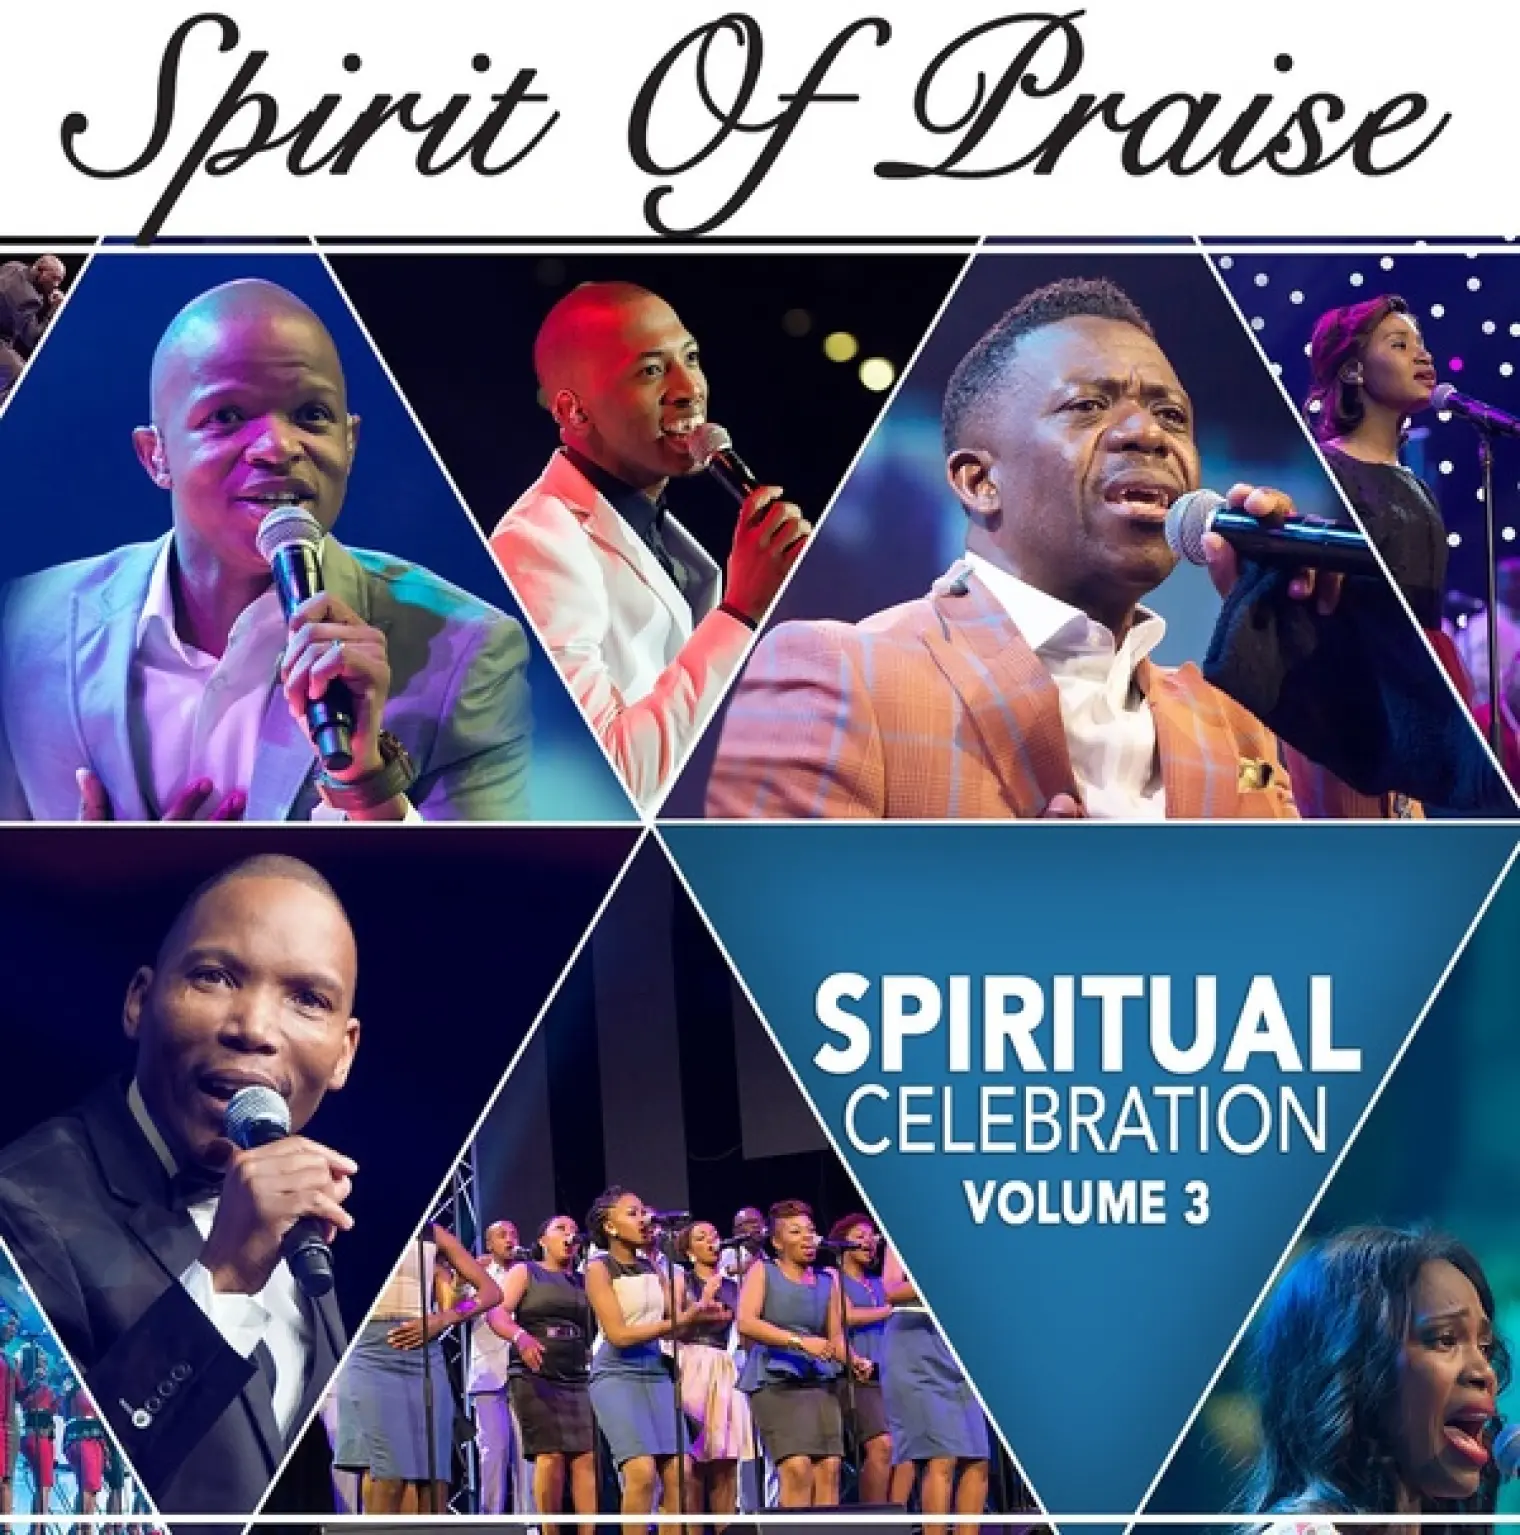 Spiritual Celebration Vol 3 (Live) -  Spirit of Praise 